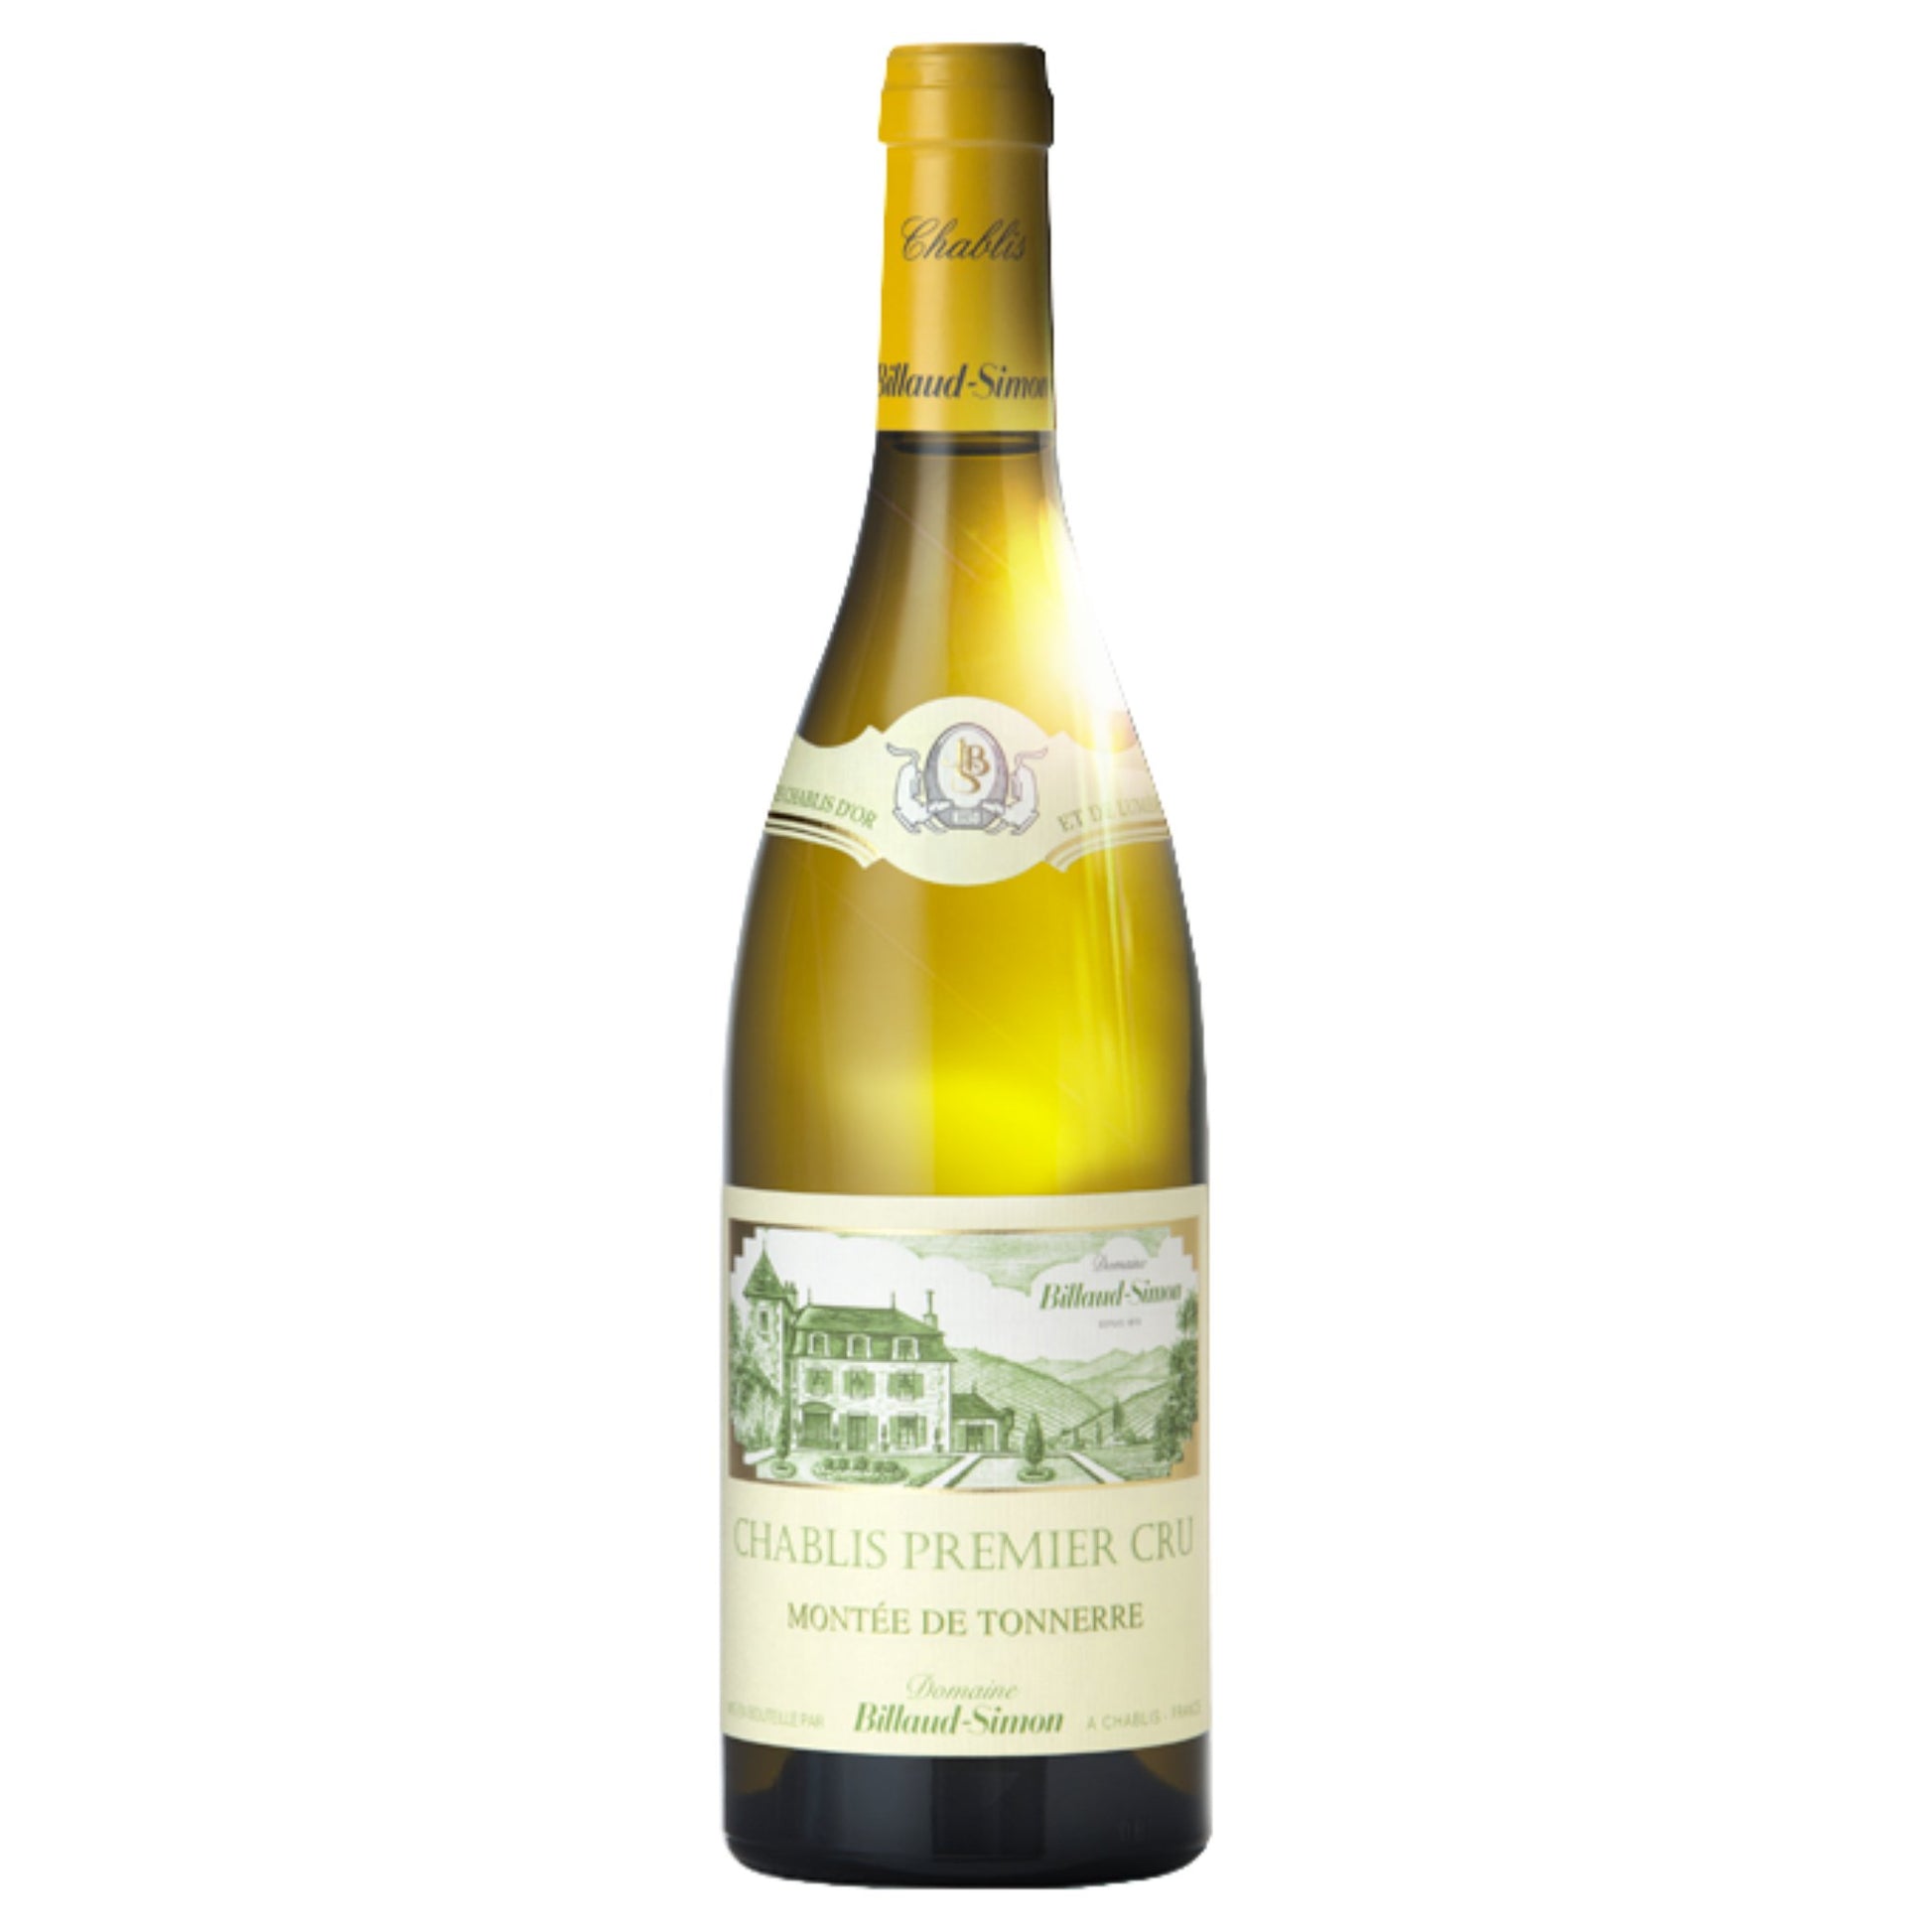 Billaud-Simon Chablis 1er Cru Montee de Tonnerre - Grand Vin Pte Ltd